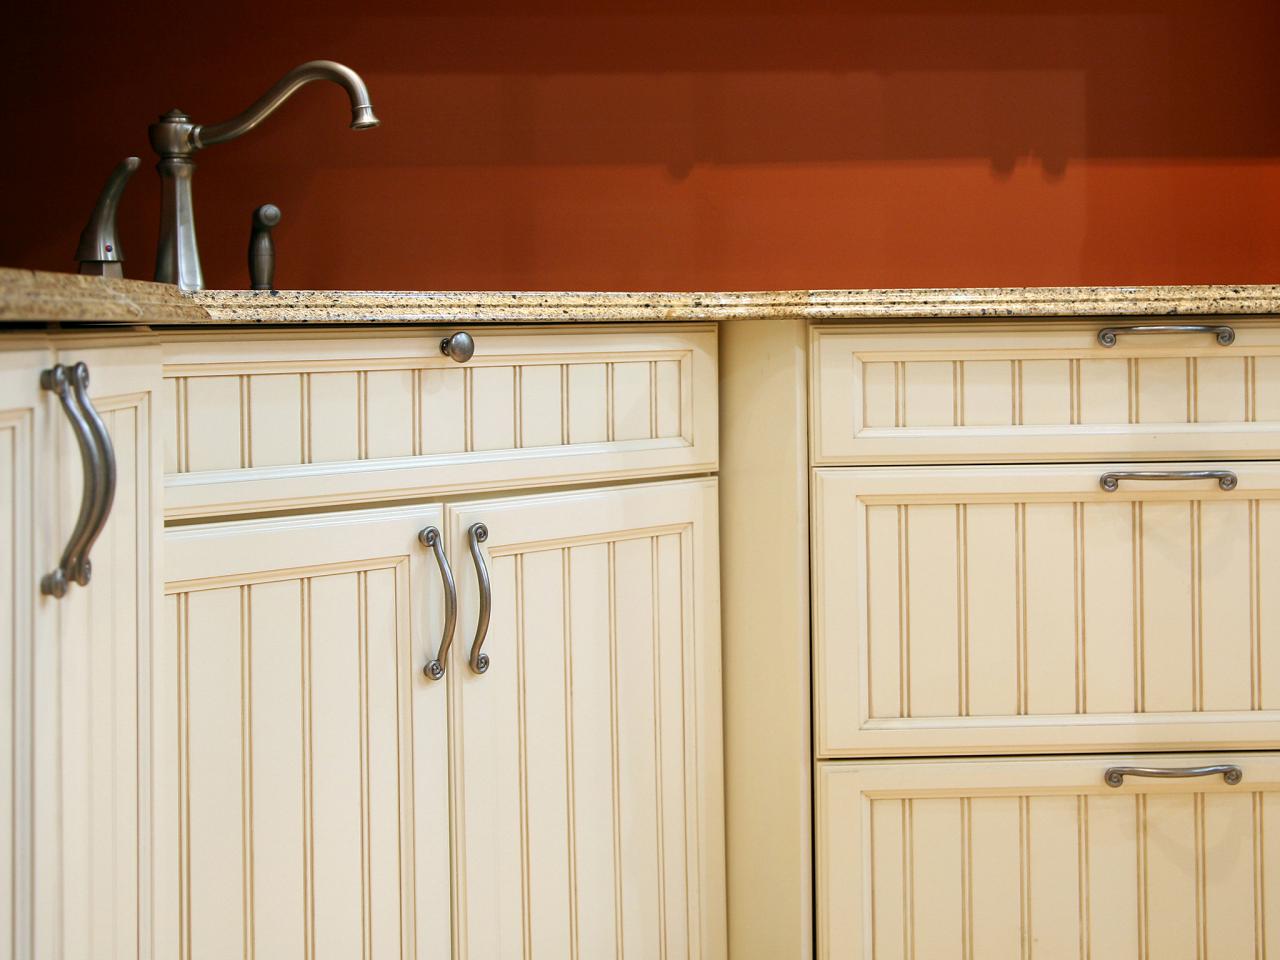 Kitchen Cabinet Door Handles And Knobs Pictures Options Tips Ideas Hgtv